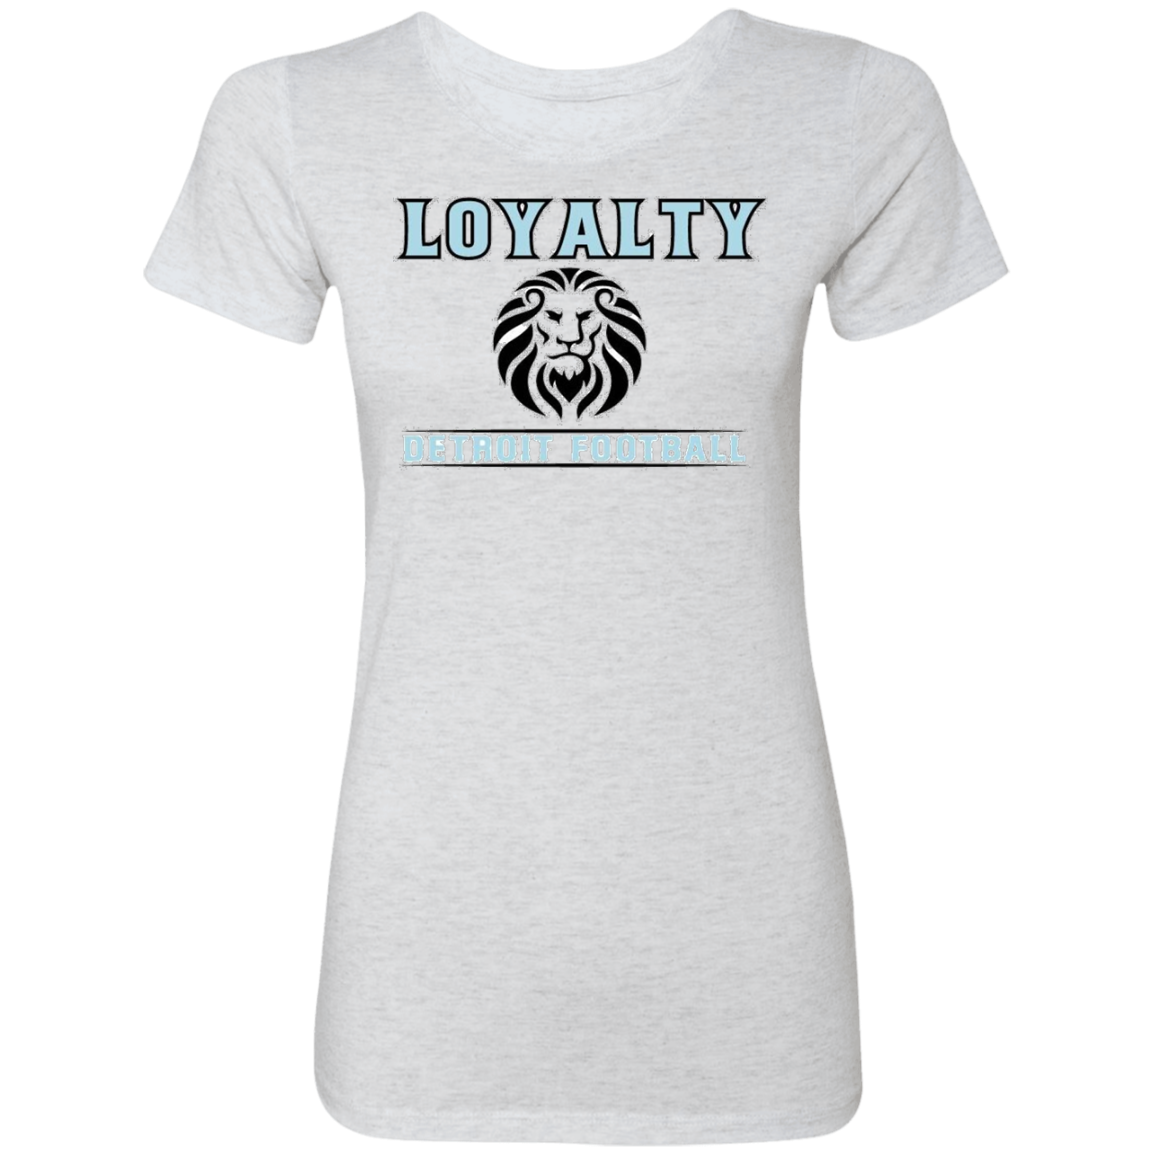 Loyality NL6710 Ladies' Triblend T-Shirt